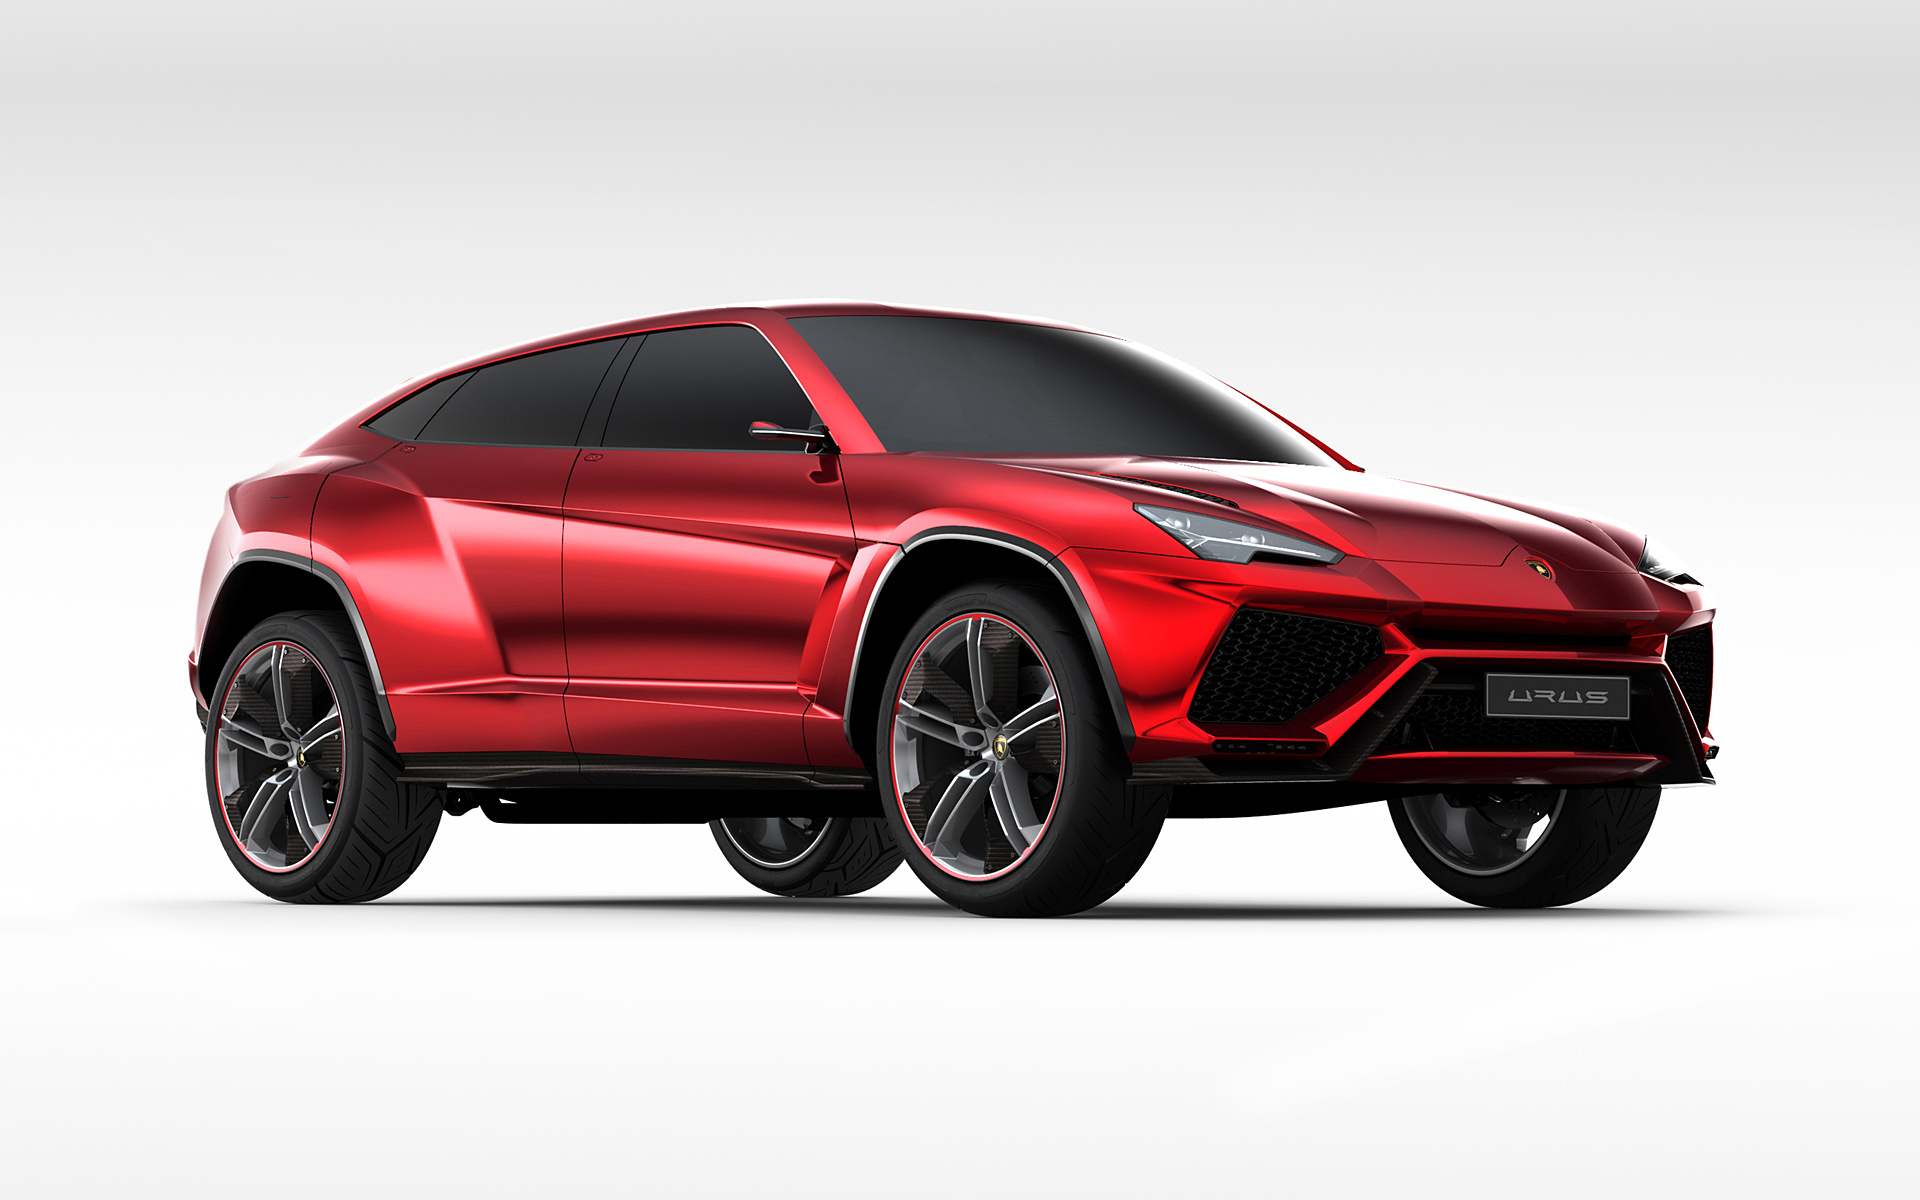  2012 Lamborghini Urus Concept Wallpaper.